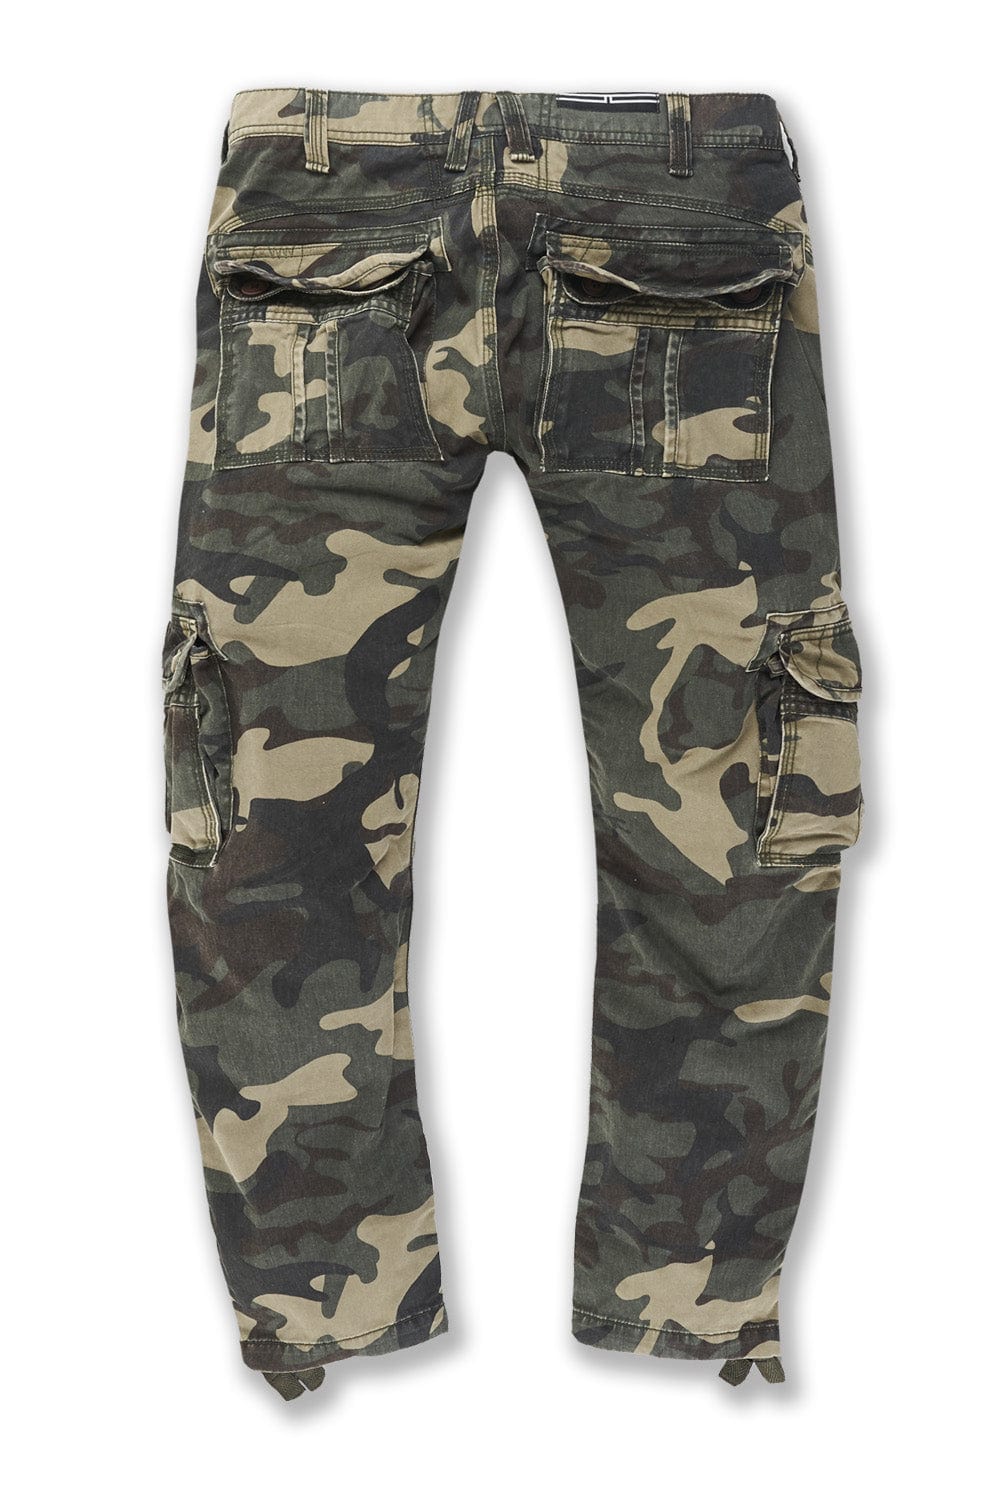 Buy Men Outdoor Cargo Pant High Waist Woodland Military Running Cargo Pant  Khaki 26 at Amazon.in